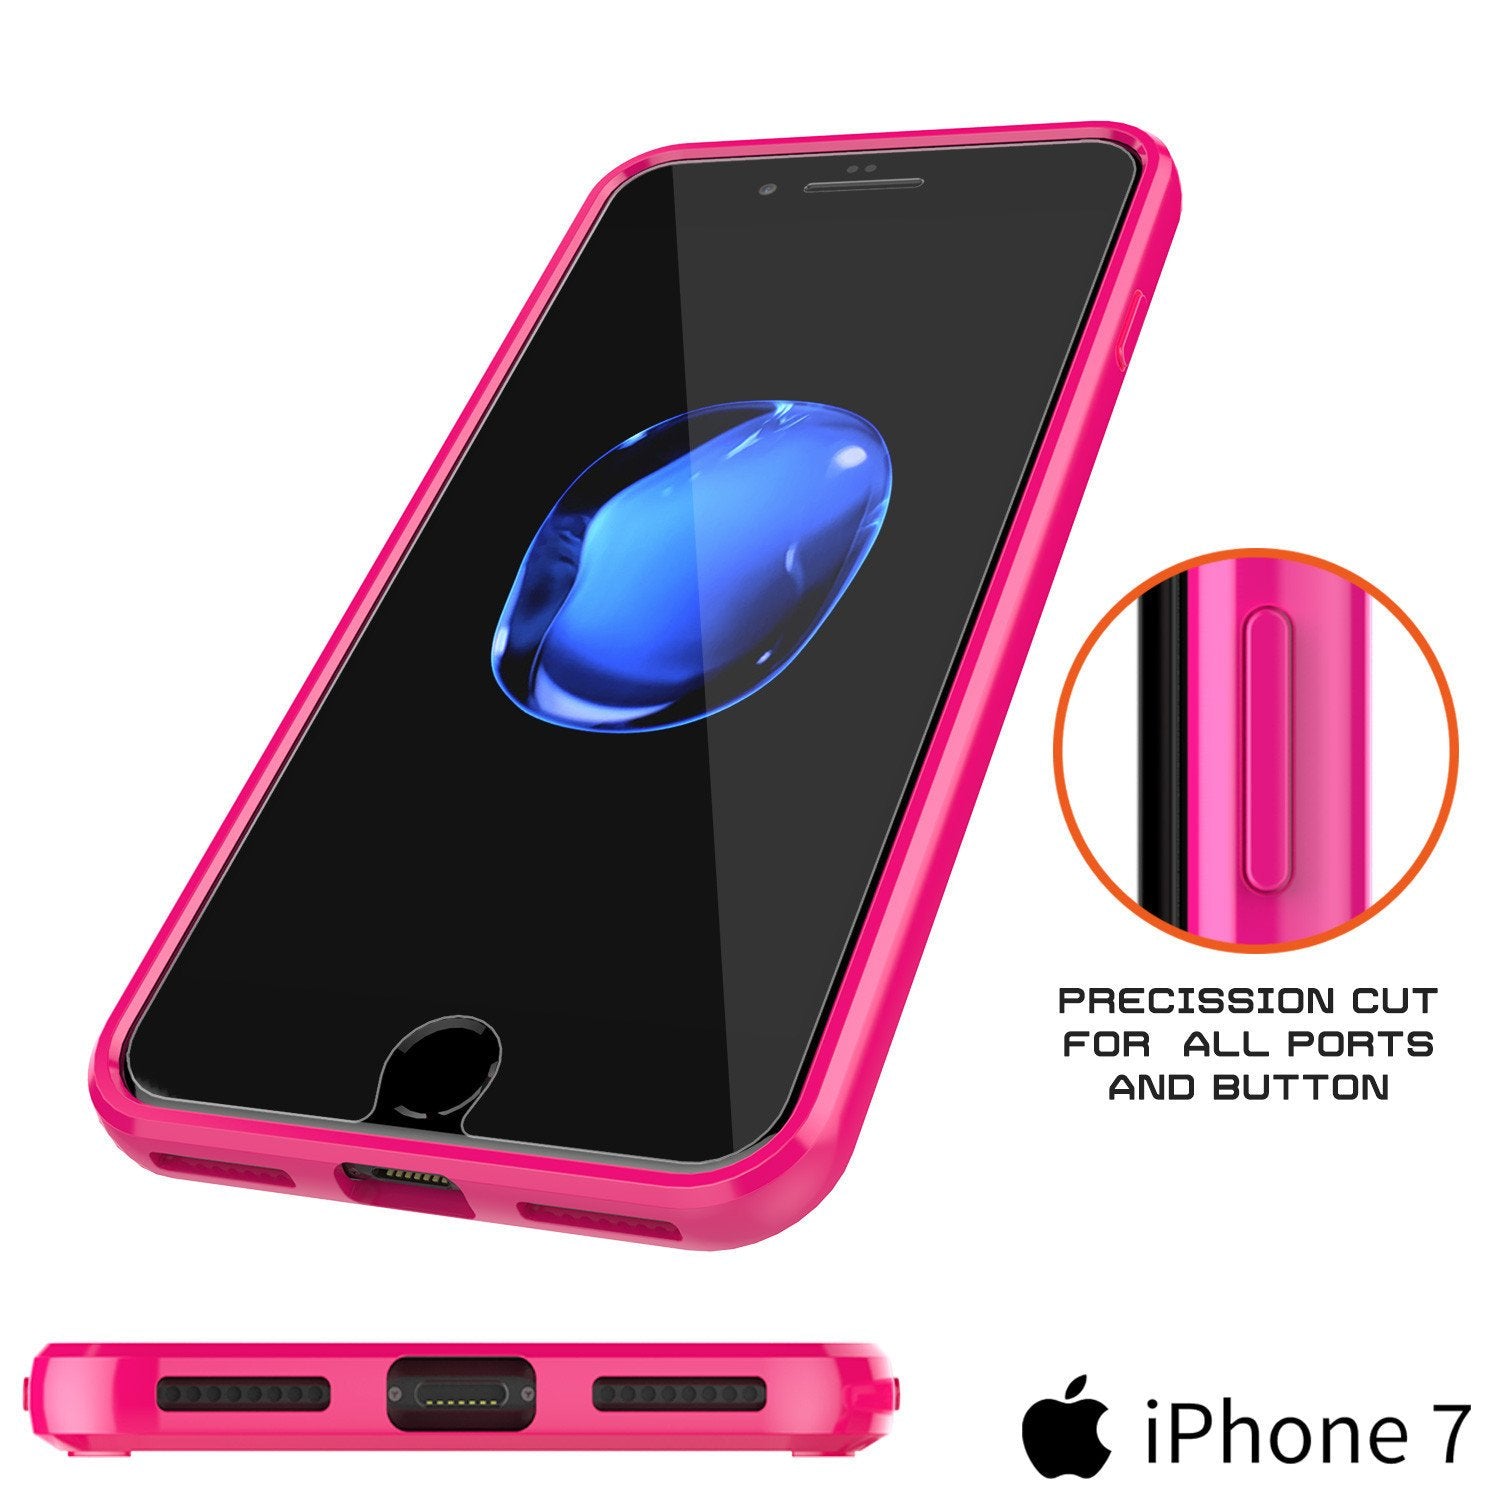 iPhone 7+ Plus Case Punkcase® LUCID 2.0 Pink Series for Apple iPhone 7+ Plus Slim | Slick Frame Lifetime Warranty Exchange